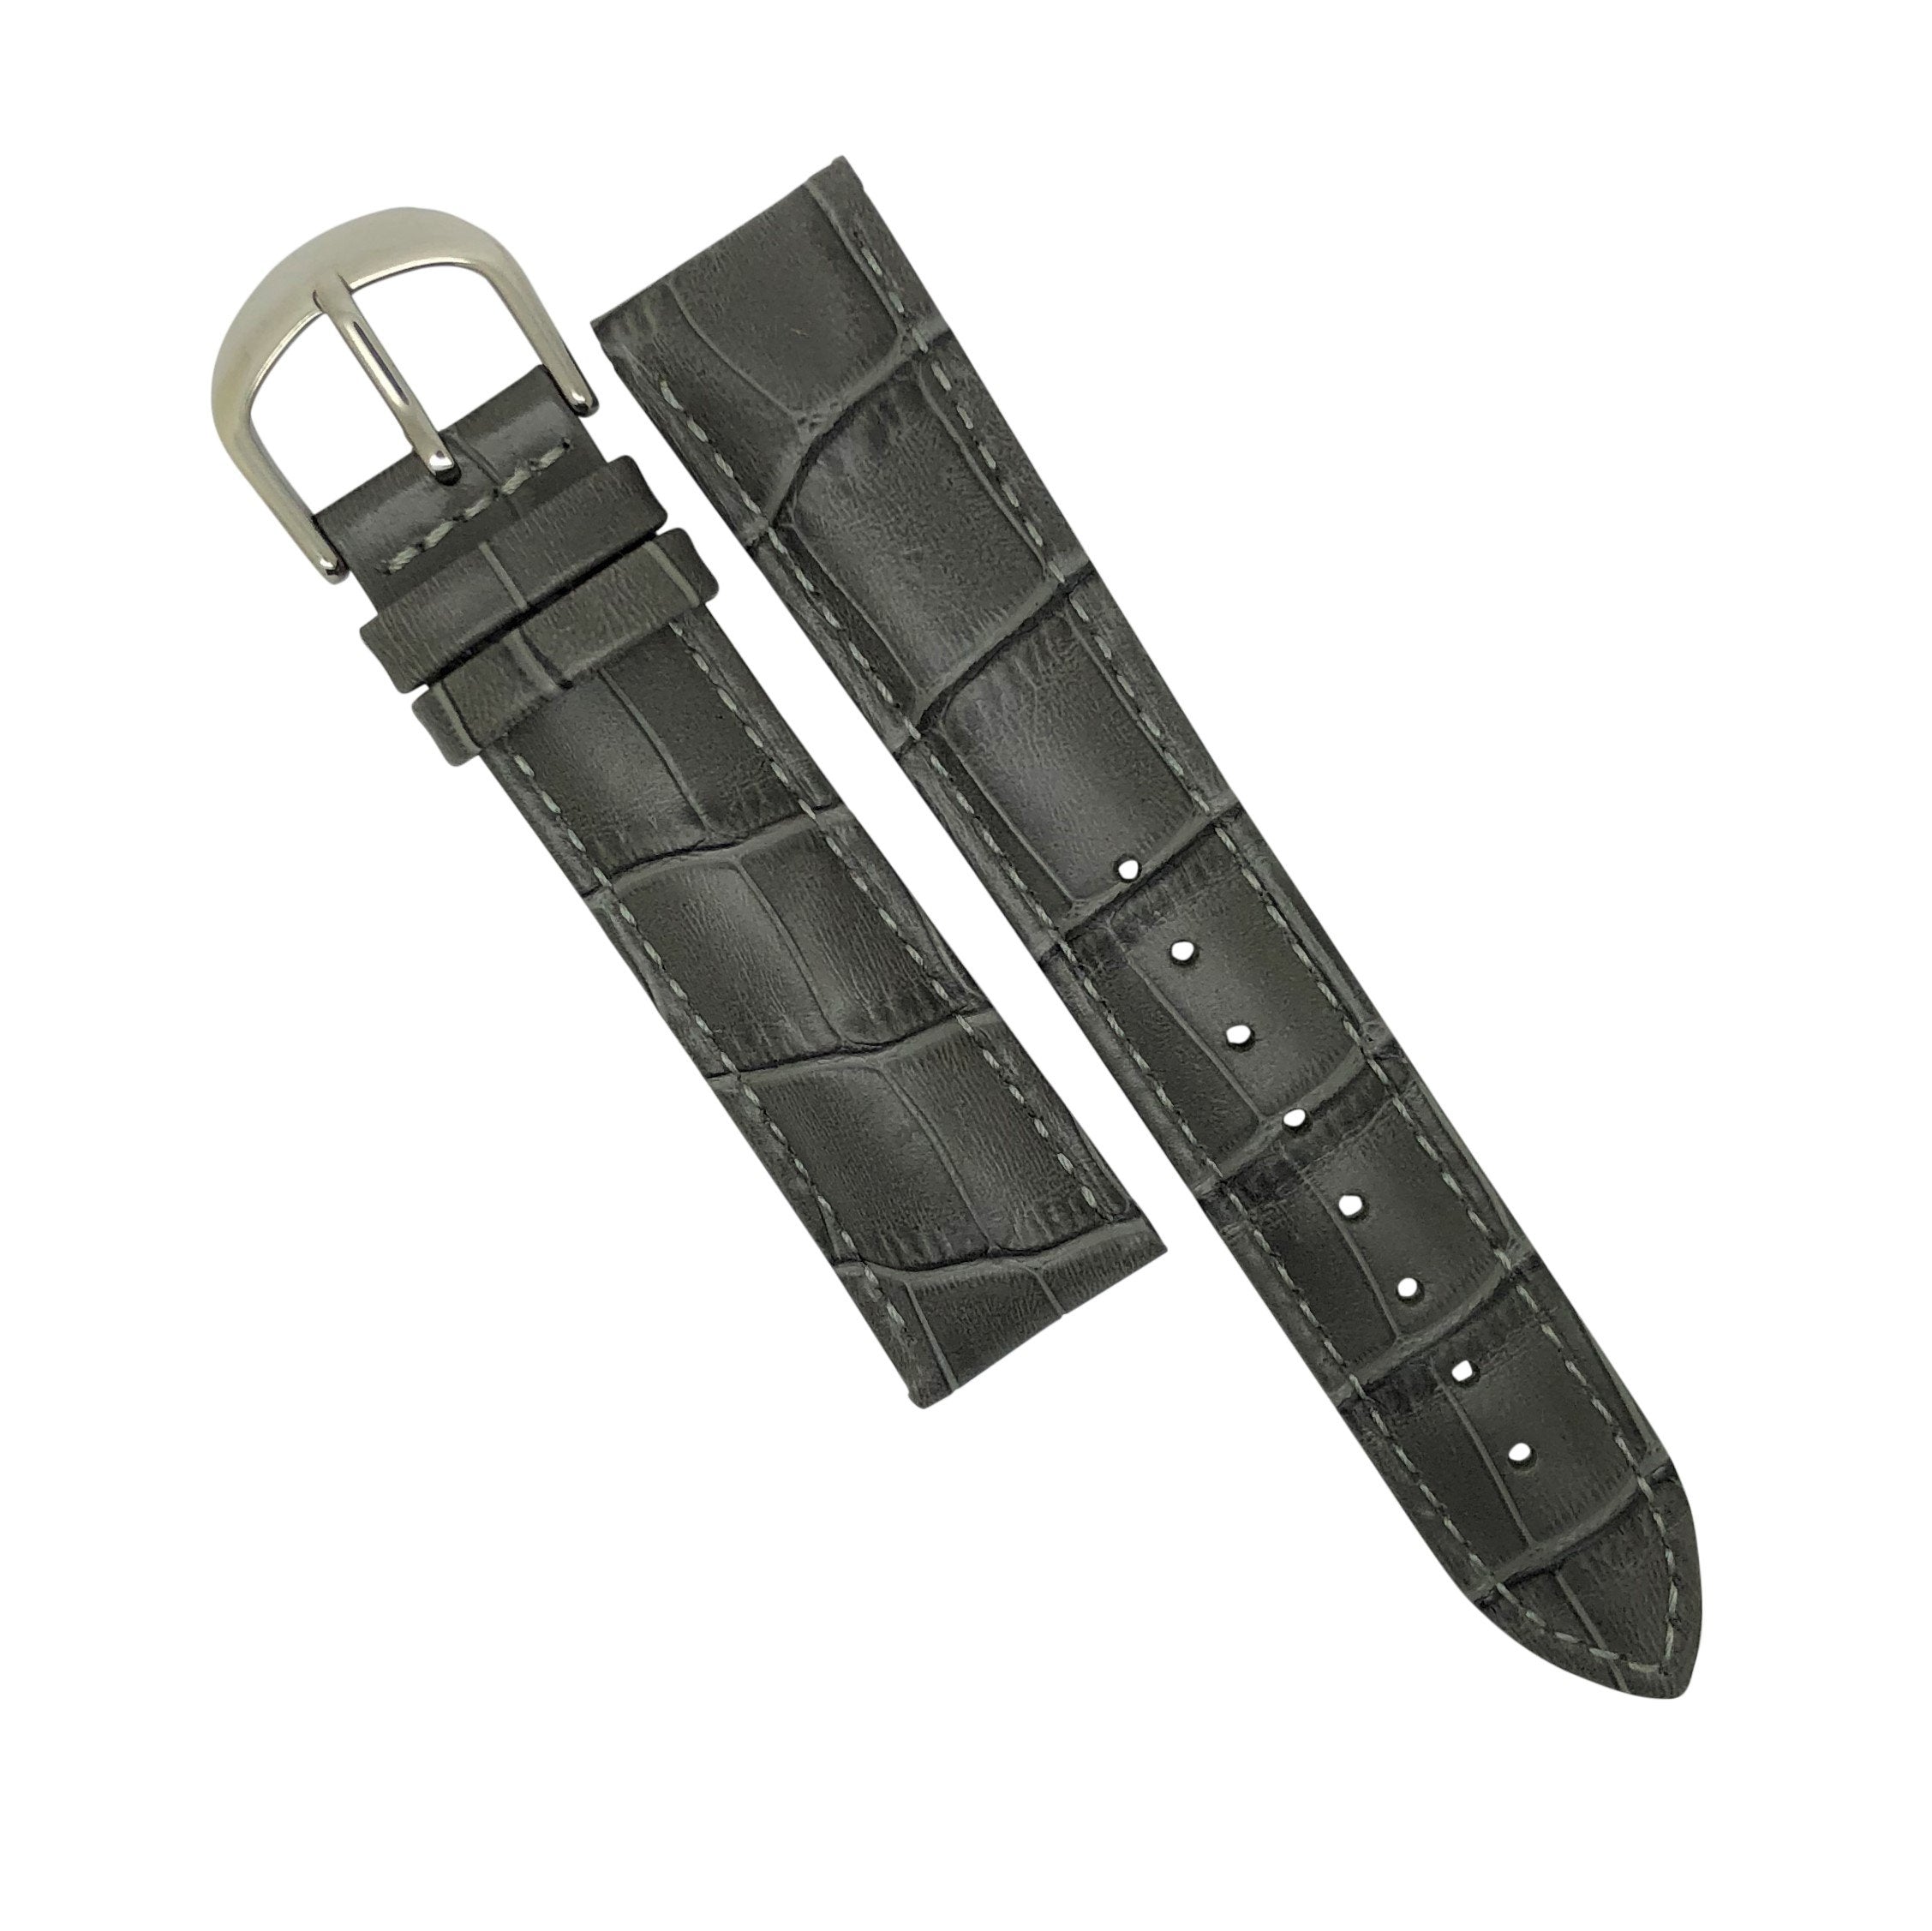 Genuine Croc Pattern Stitched Leather Watch Strap in Grey